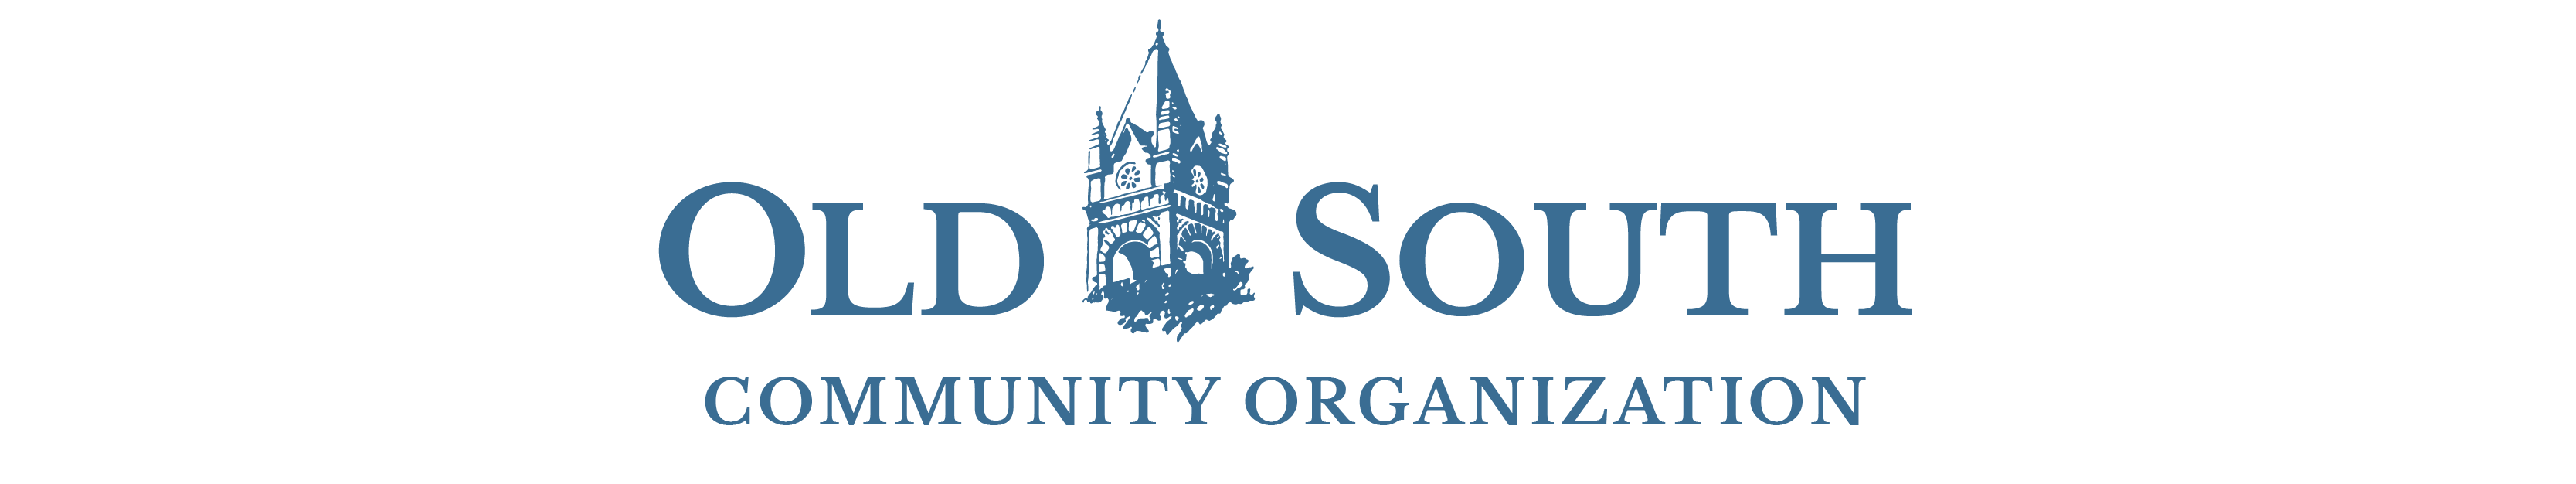 Old South Community Organization